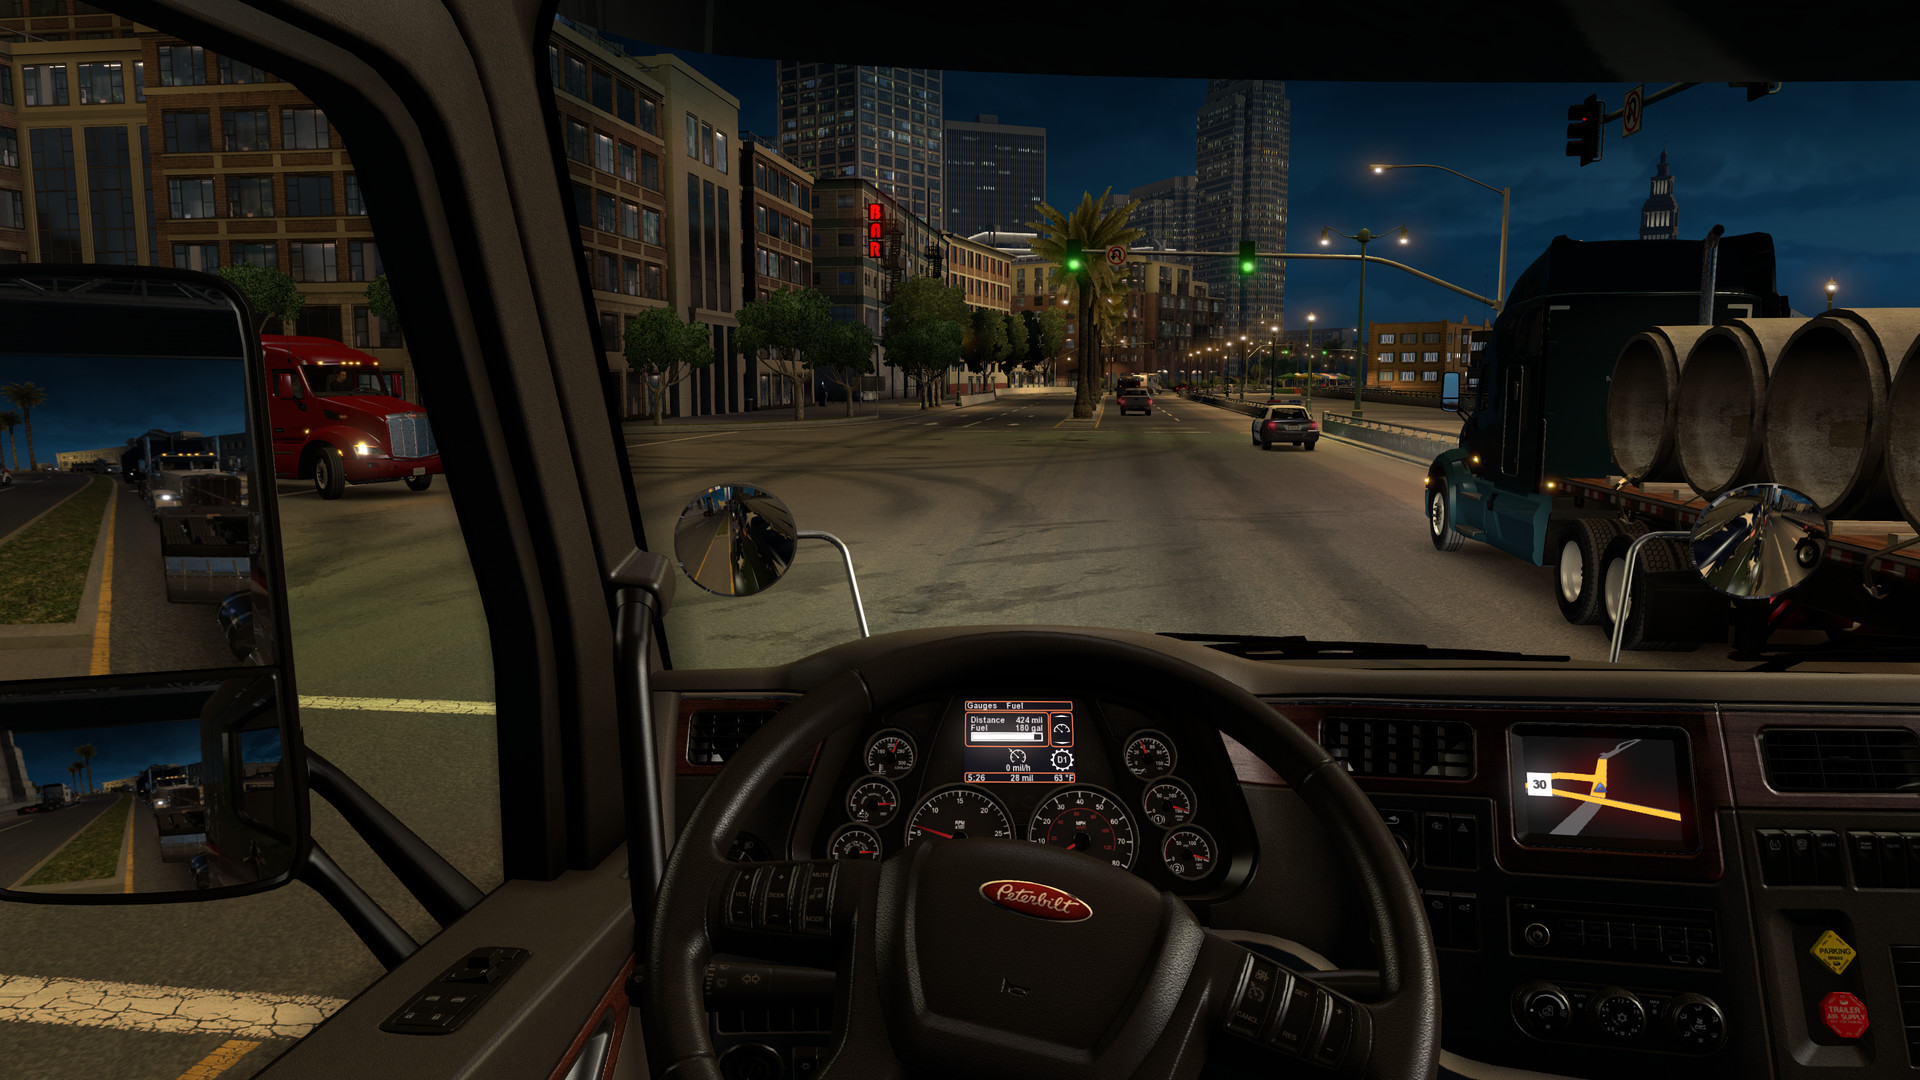 Truck simulator torrent kickass 3 download euro Euro Truck